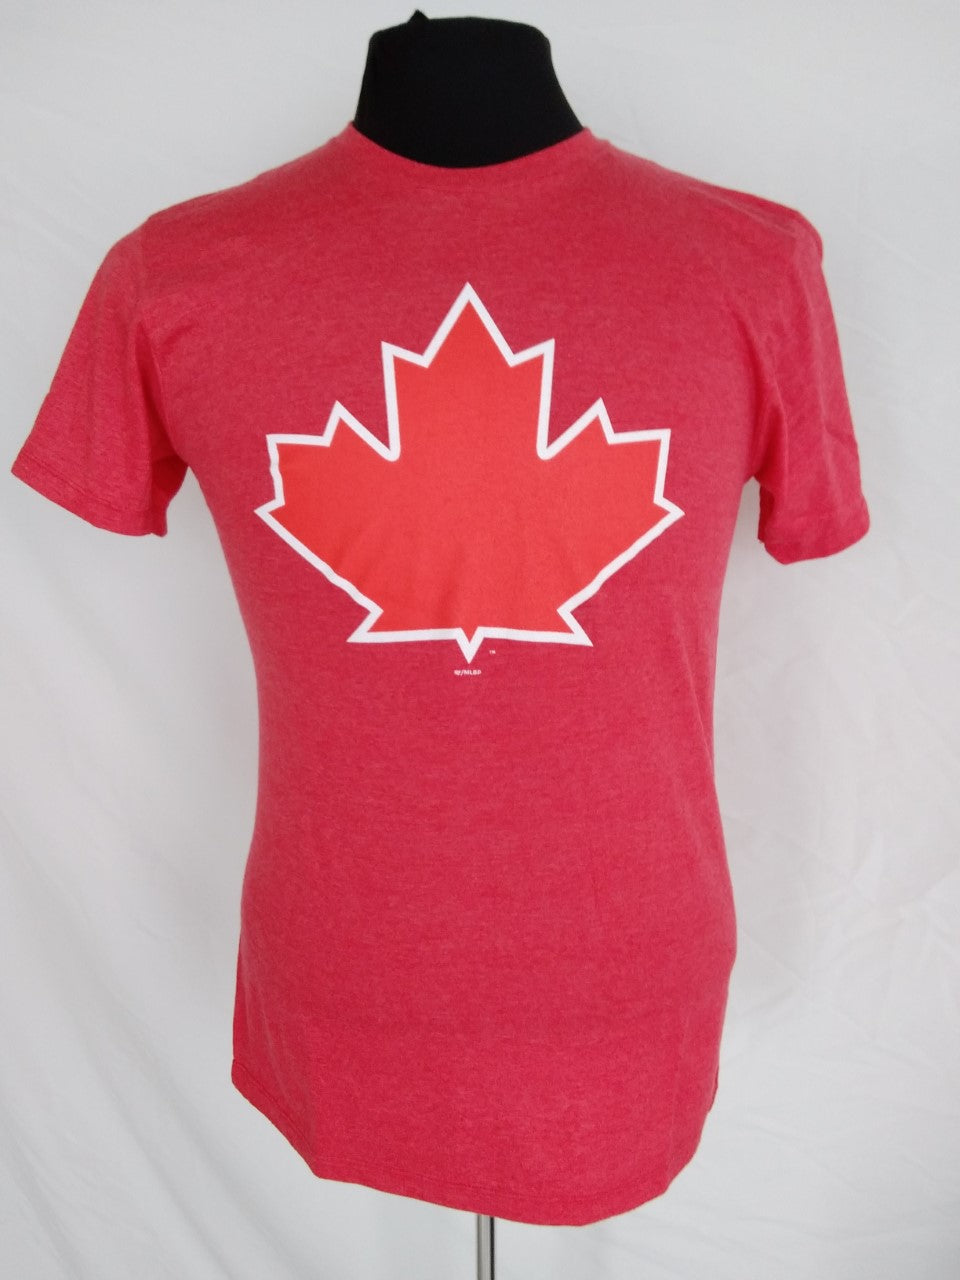 47Brand MLB - Maple Leaf Logo T-Shirt - Size S